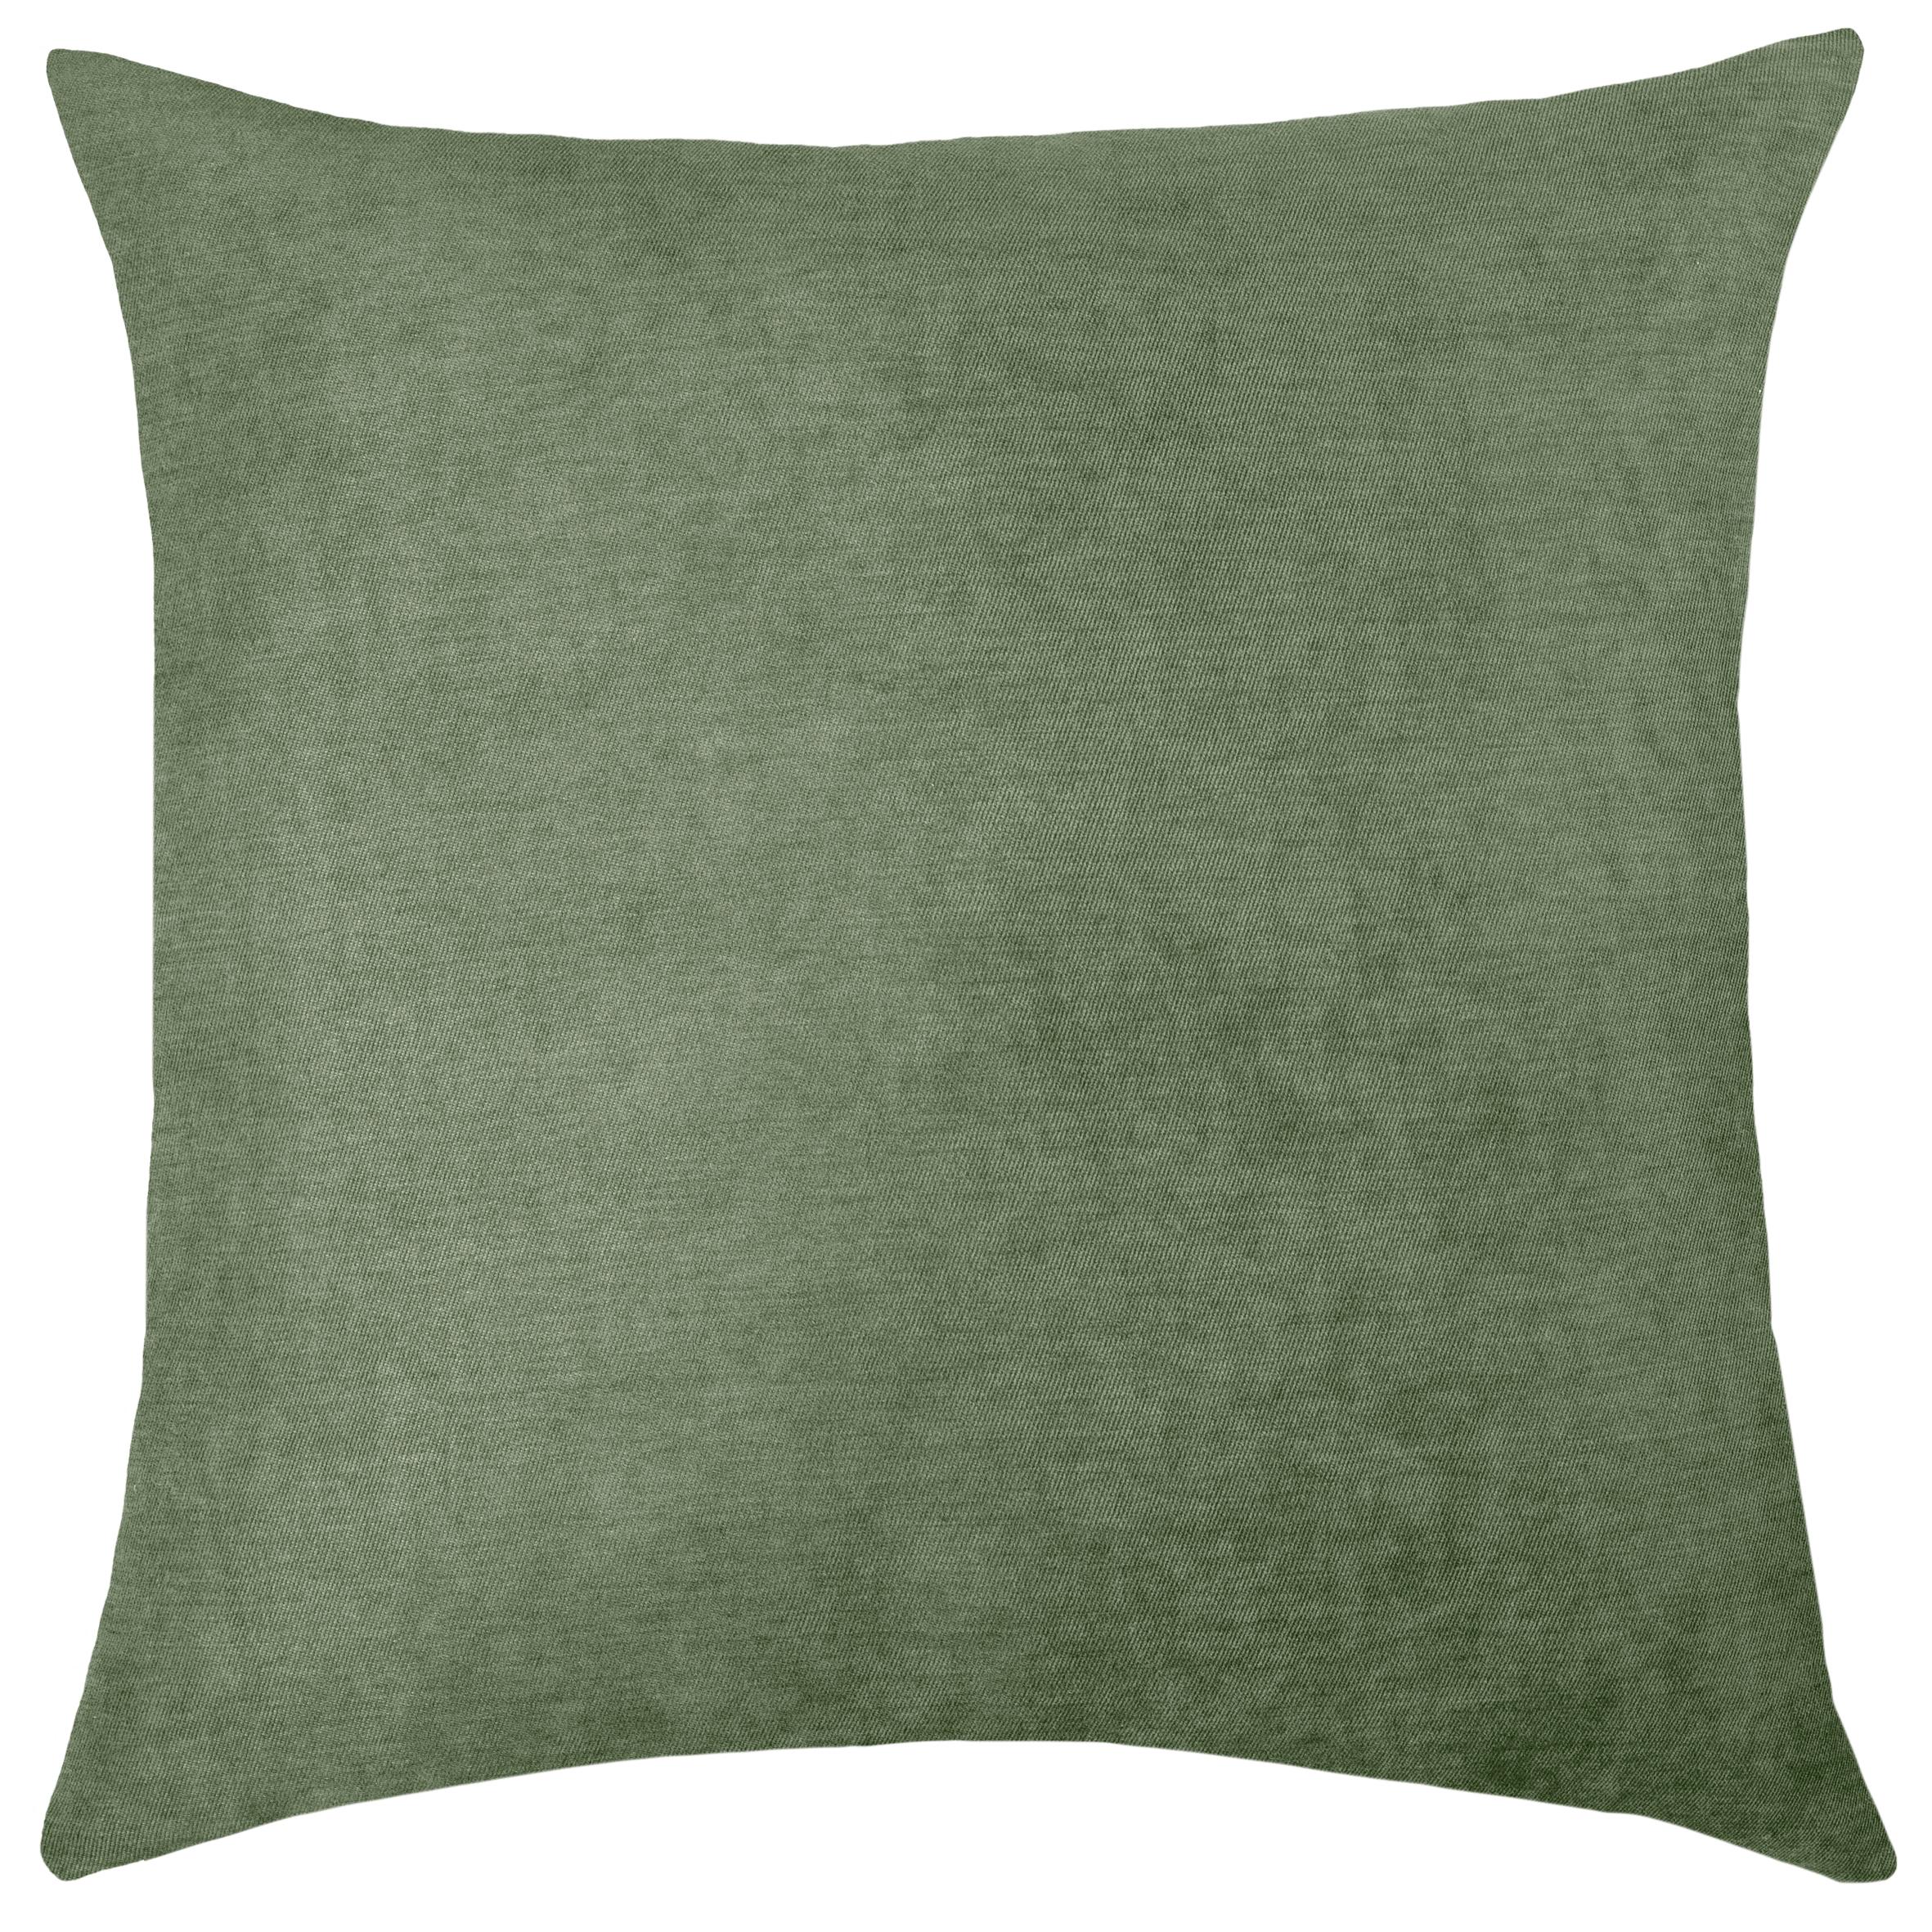 Dekoračný Vankúš Nizza, 45/45cm, Olivovo Zelená - olivovozelená, textil (45/45cm) - Modern Living